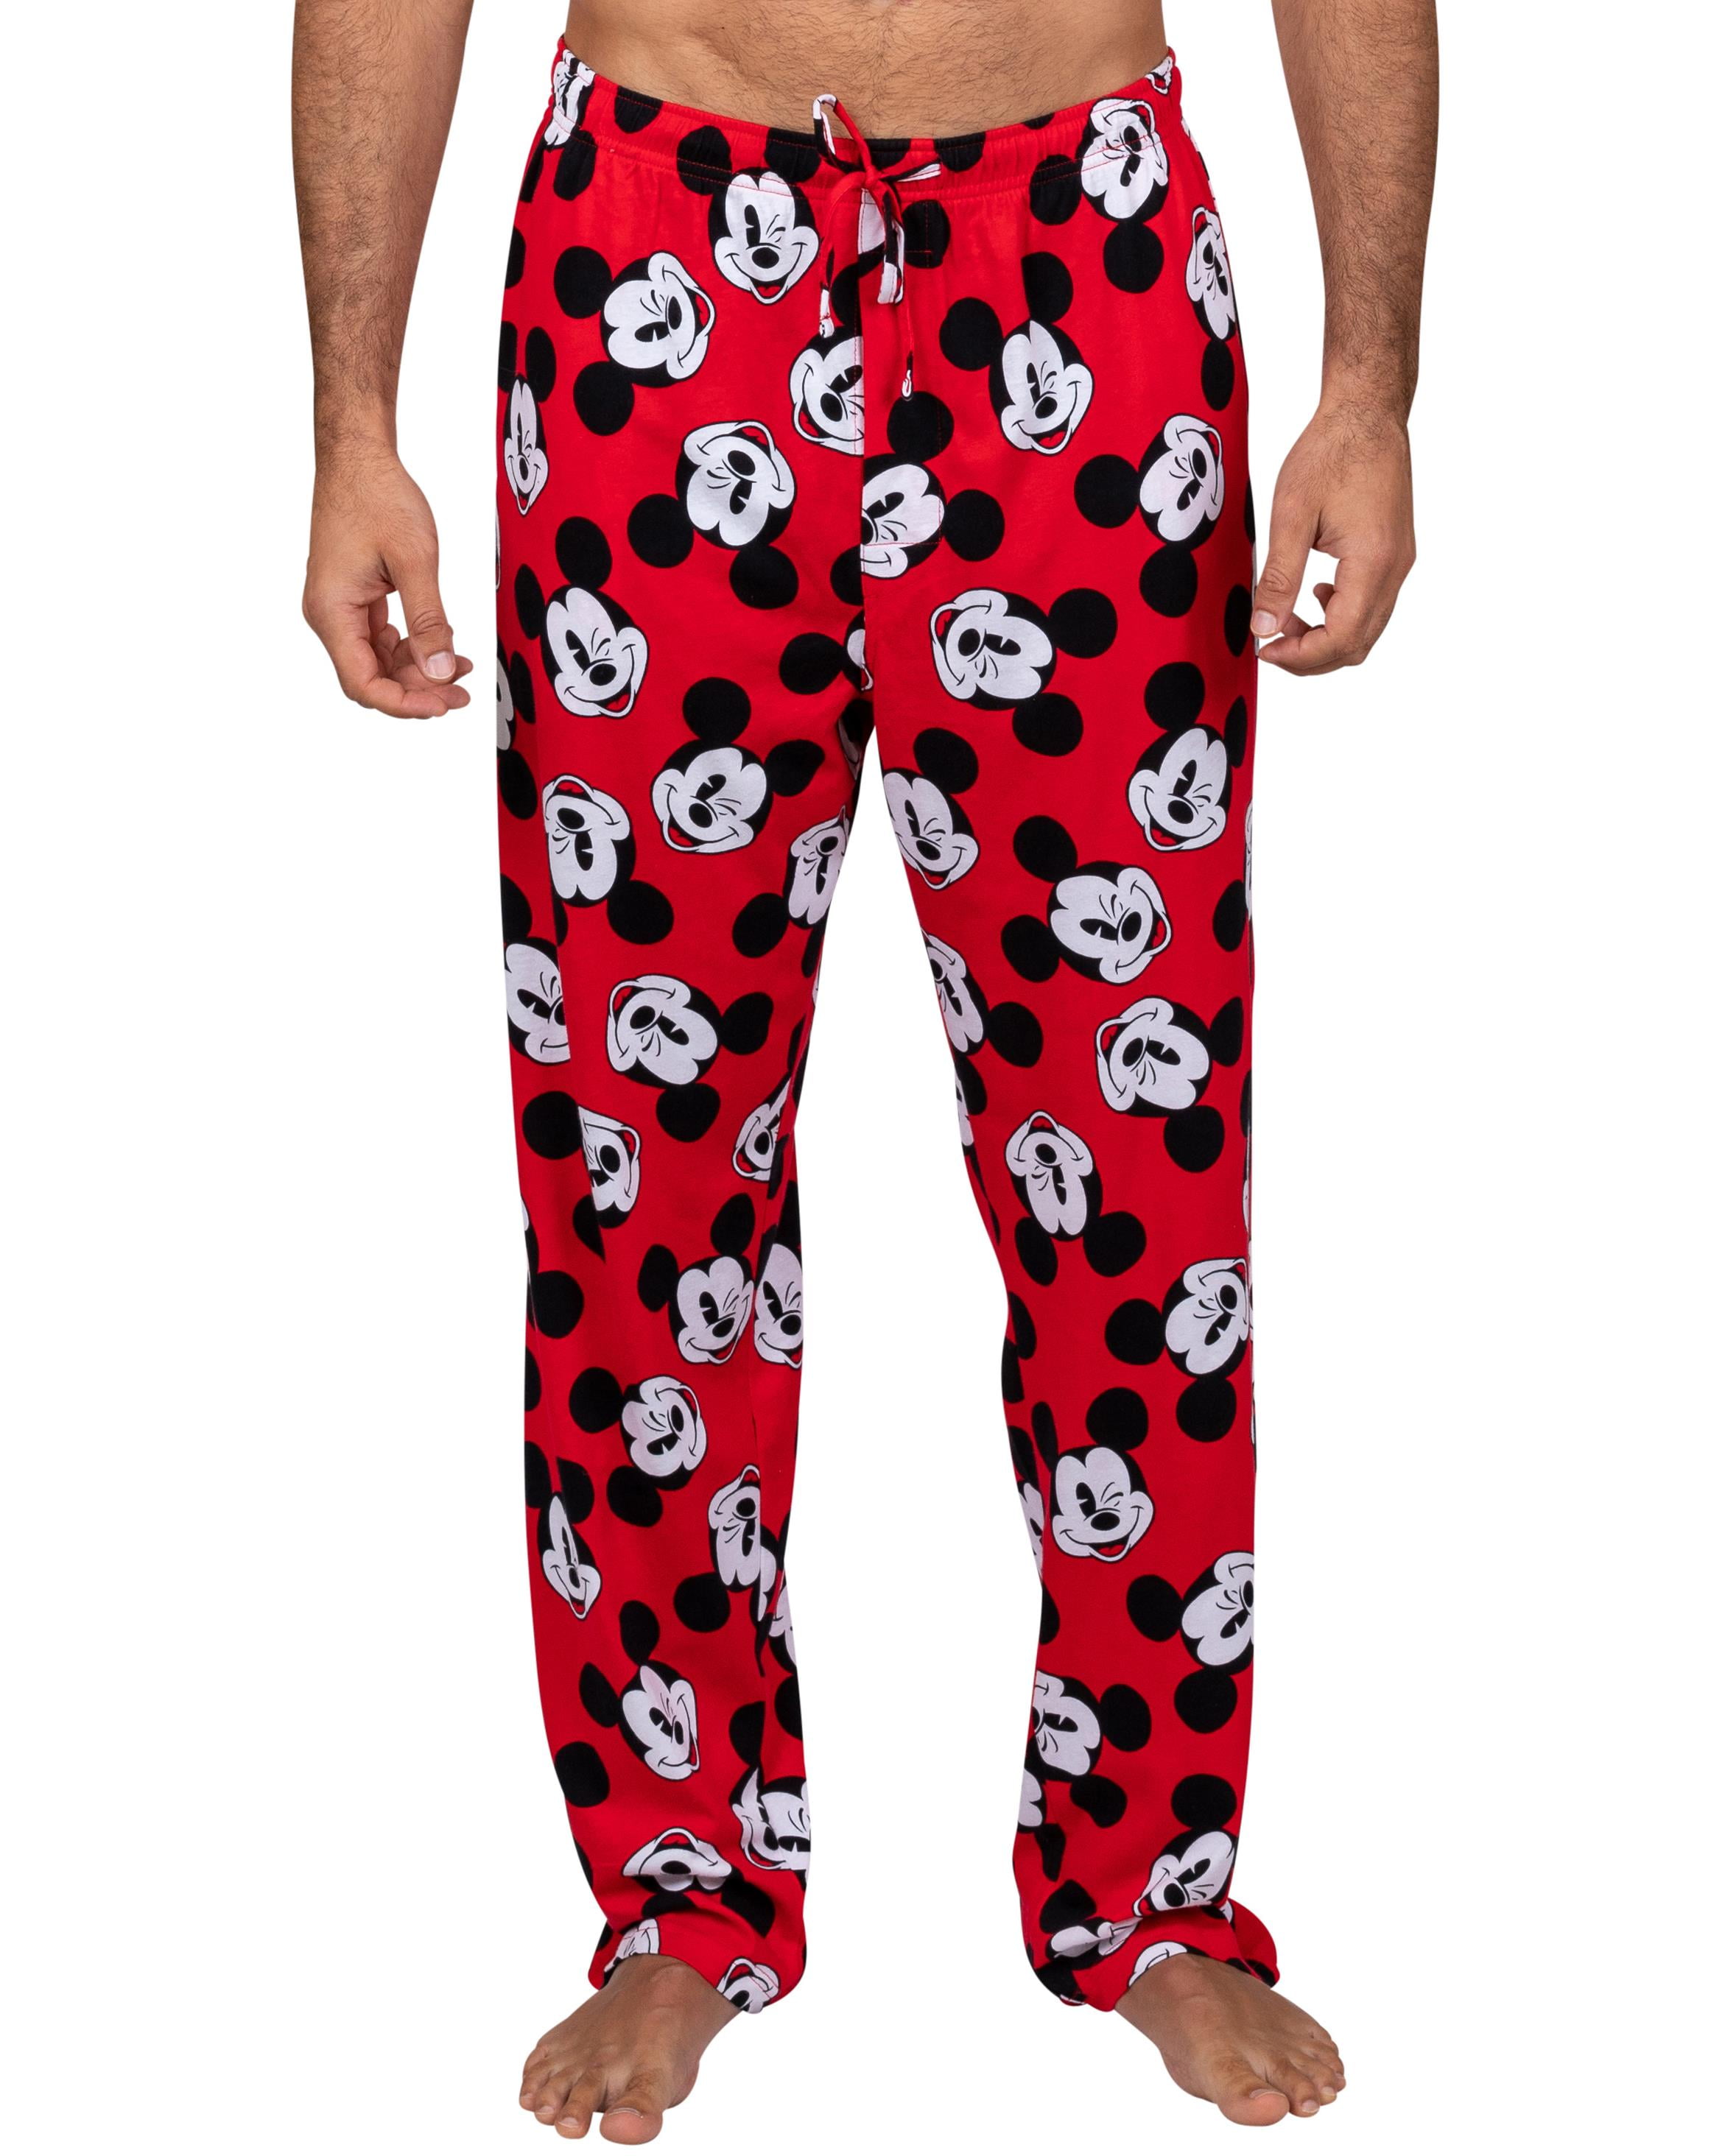 Disney Mens Pants Fun Print Pajama Lounge Pants Joggers